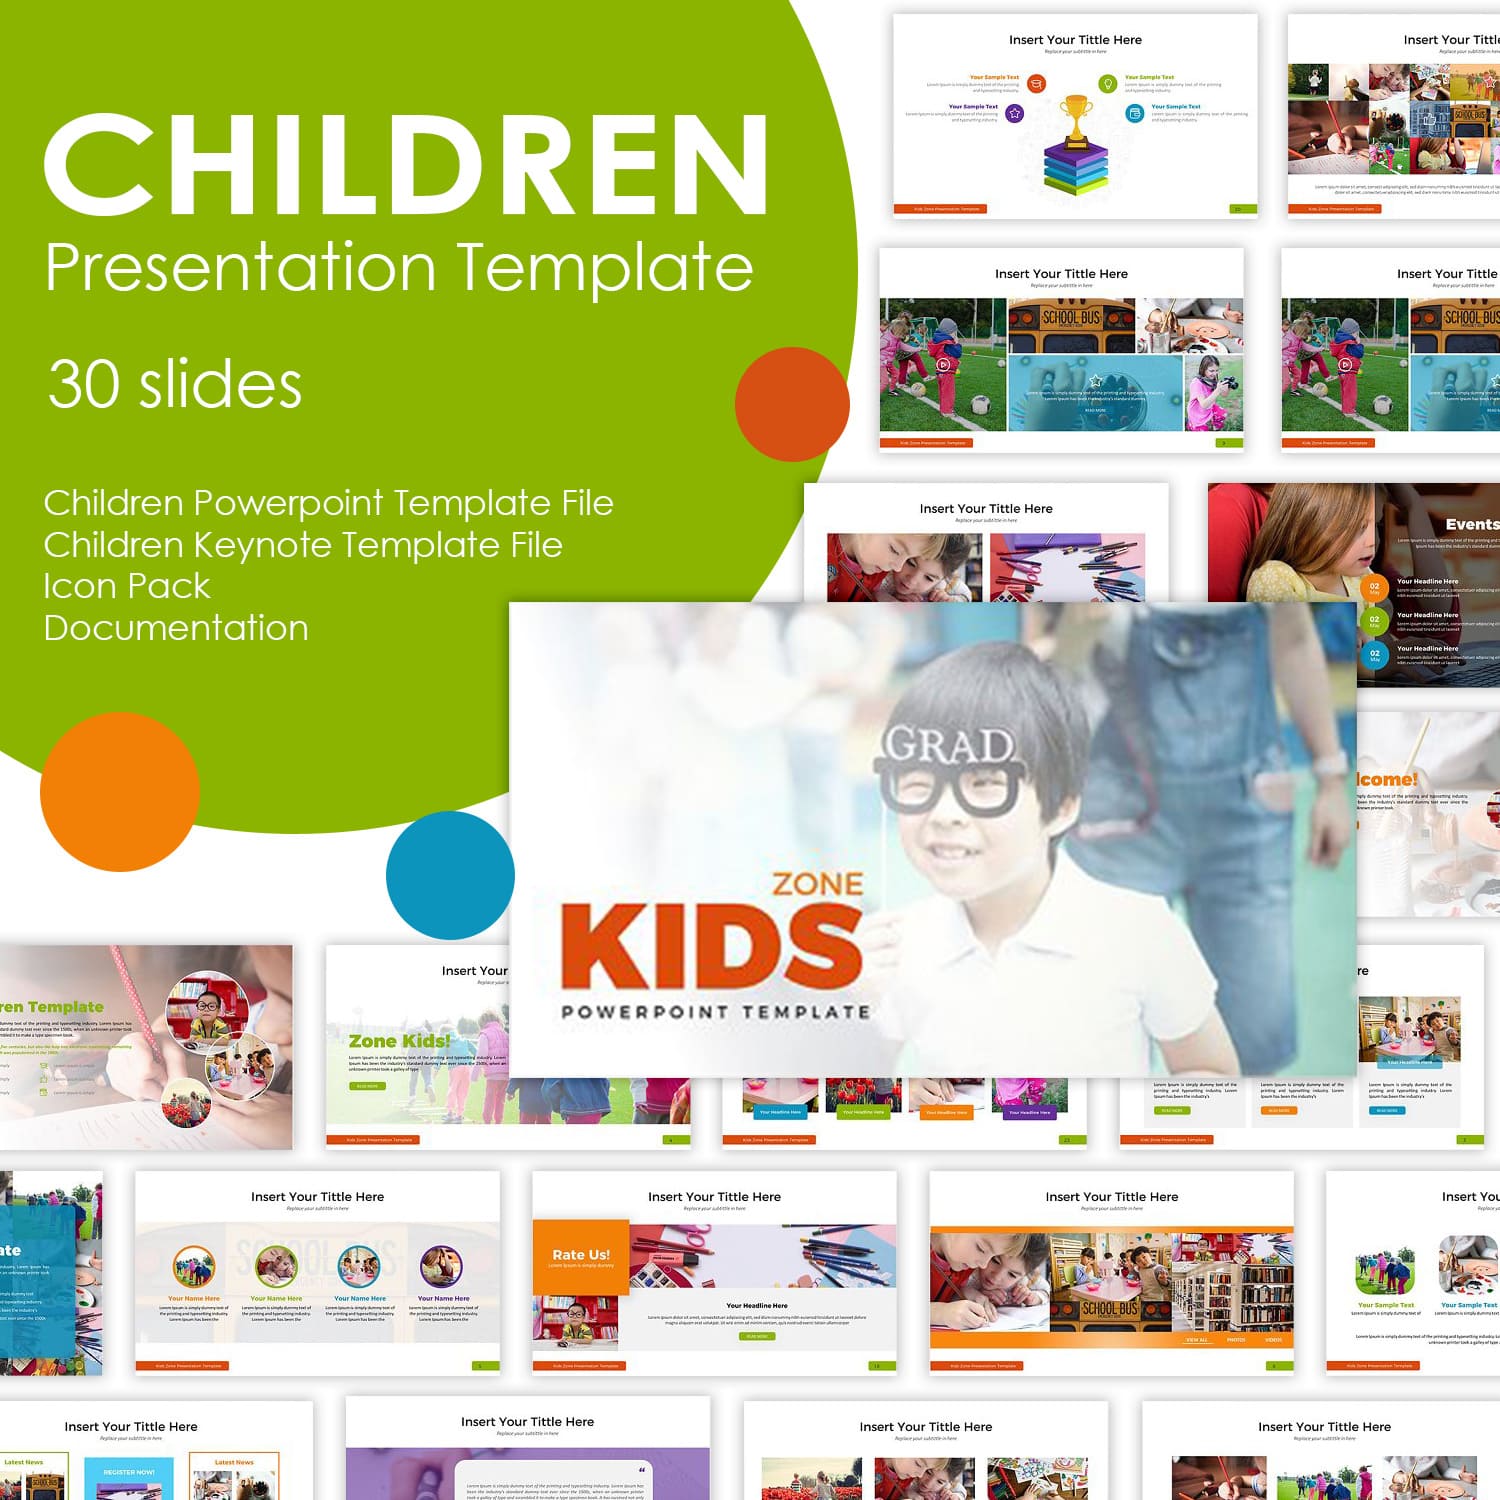 Children Presentation Template main cover.